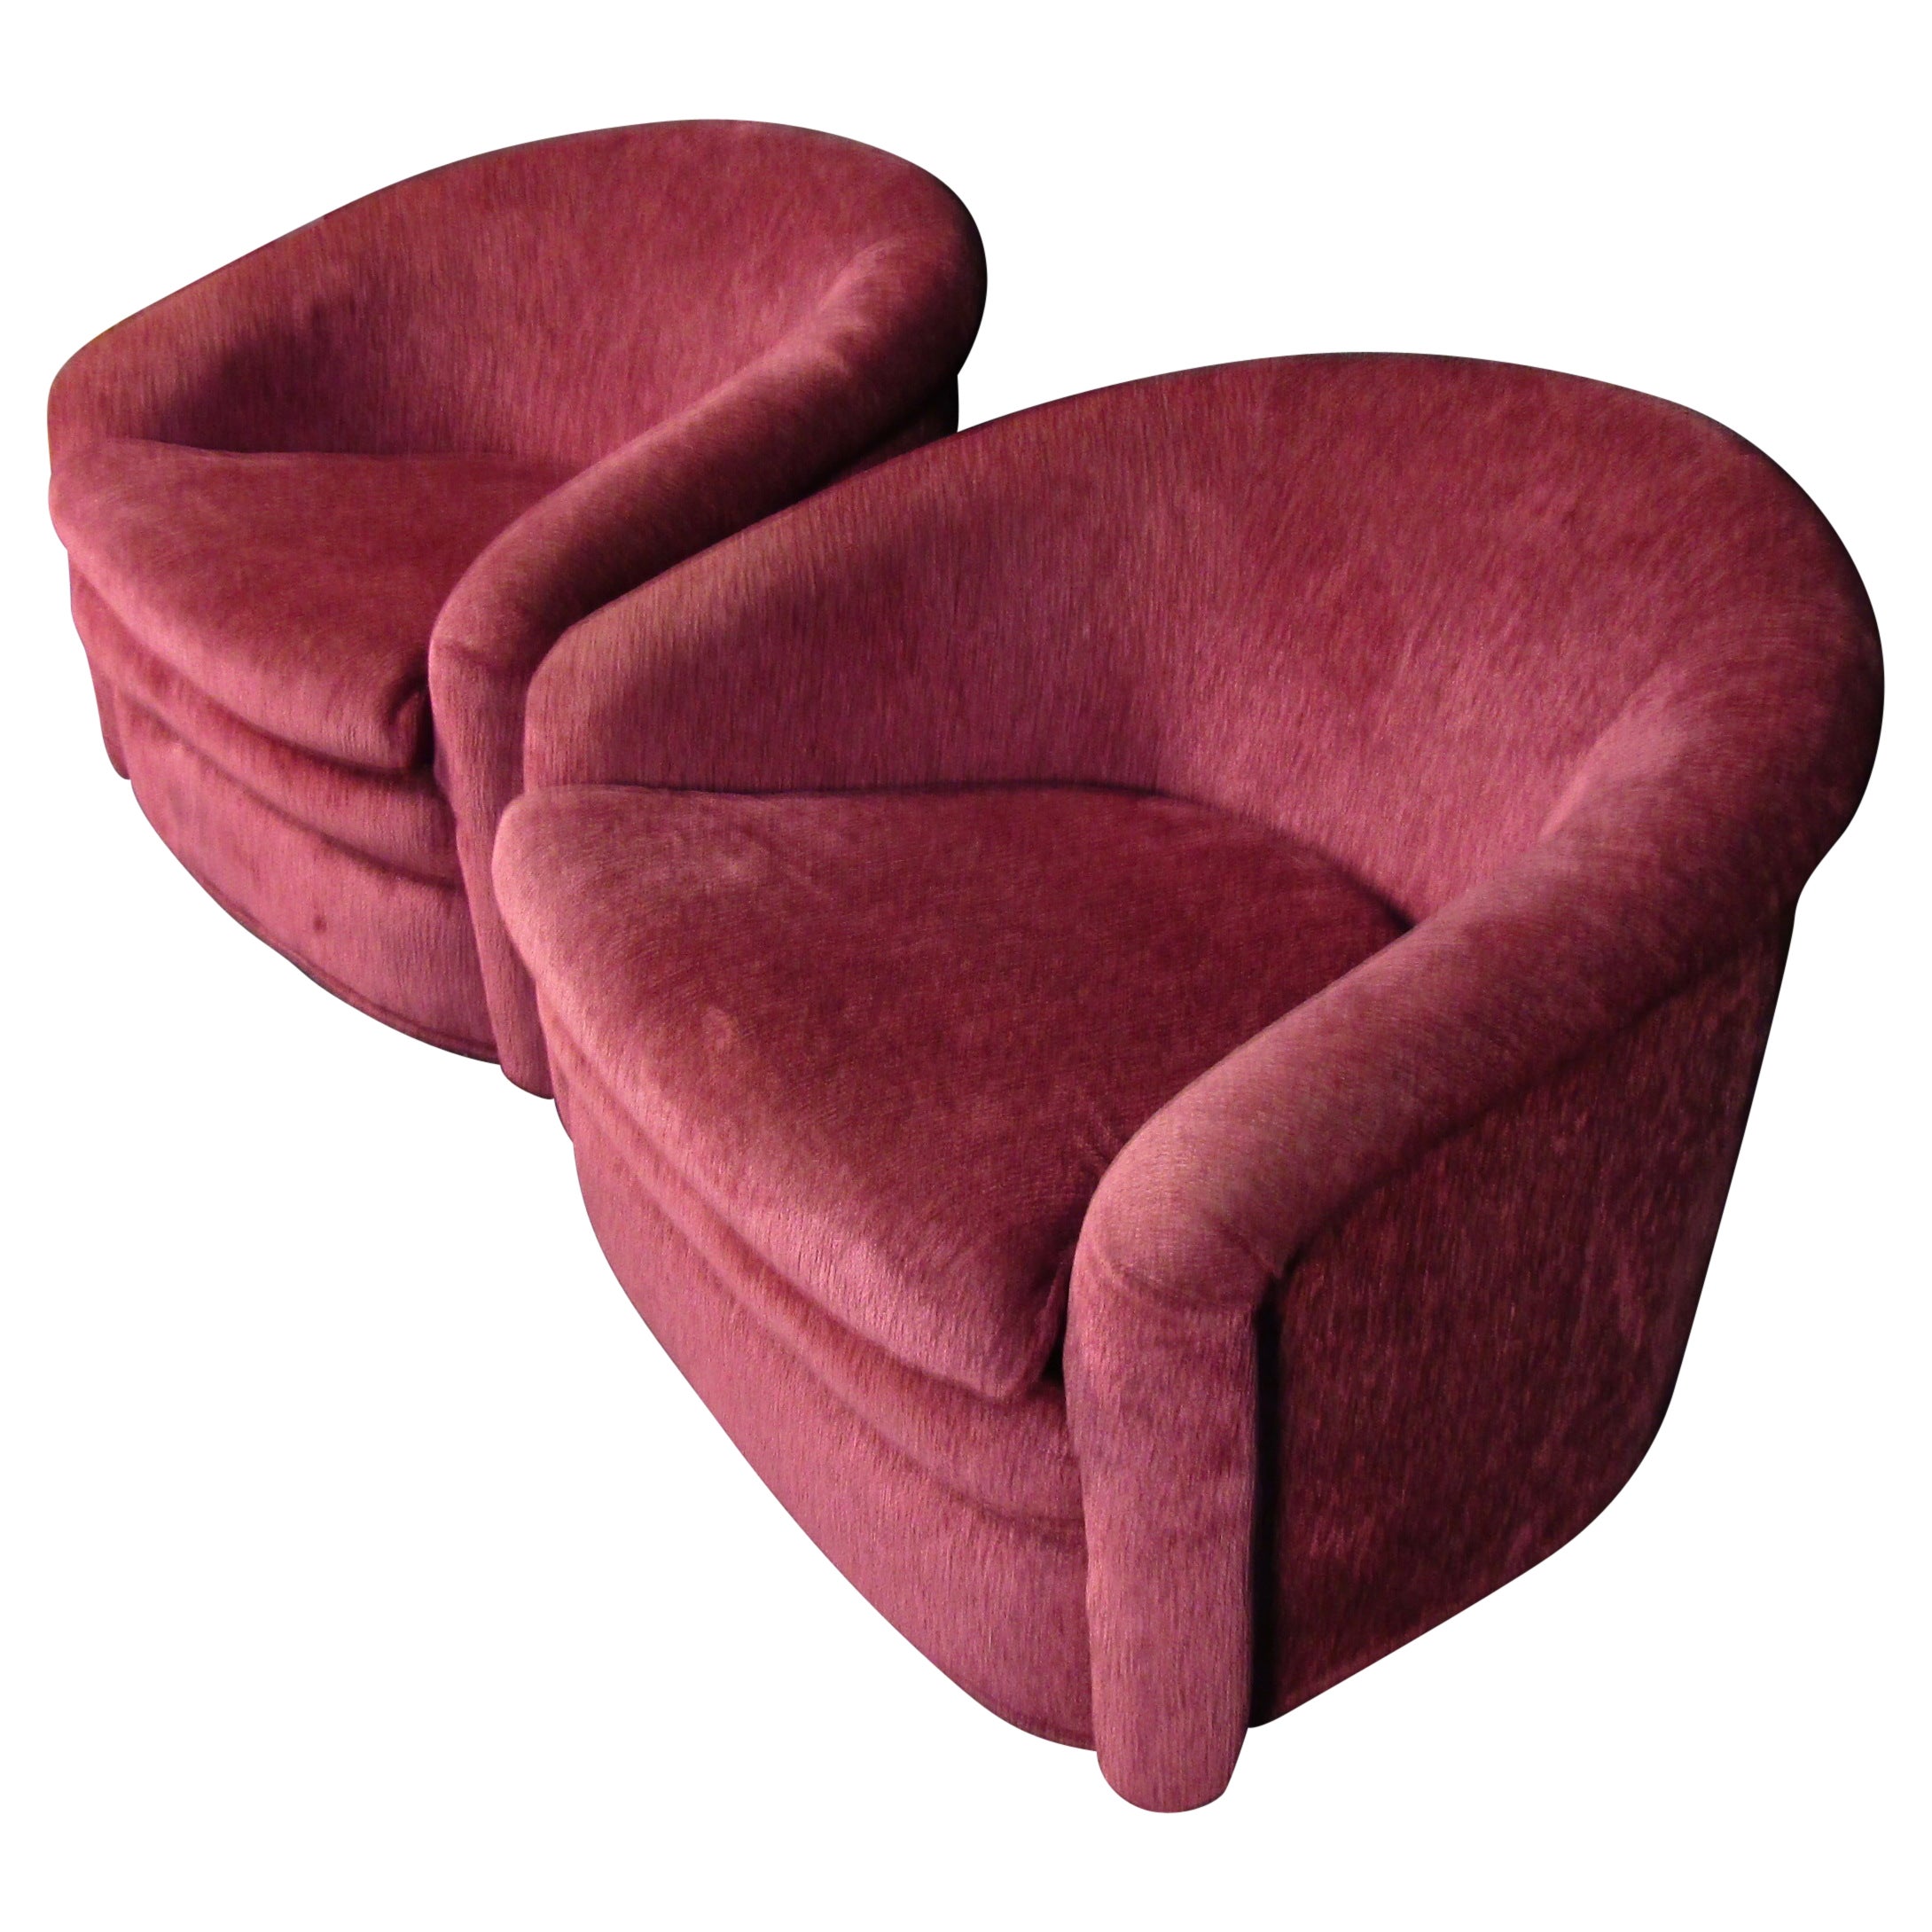 Mid-Century Modern Maroon Swivel Lounge Chairs